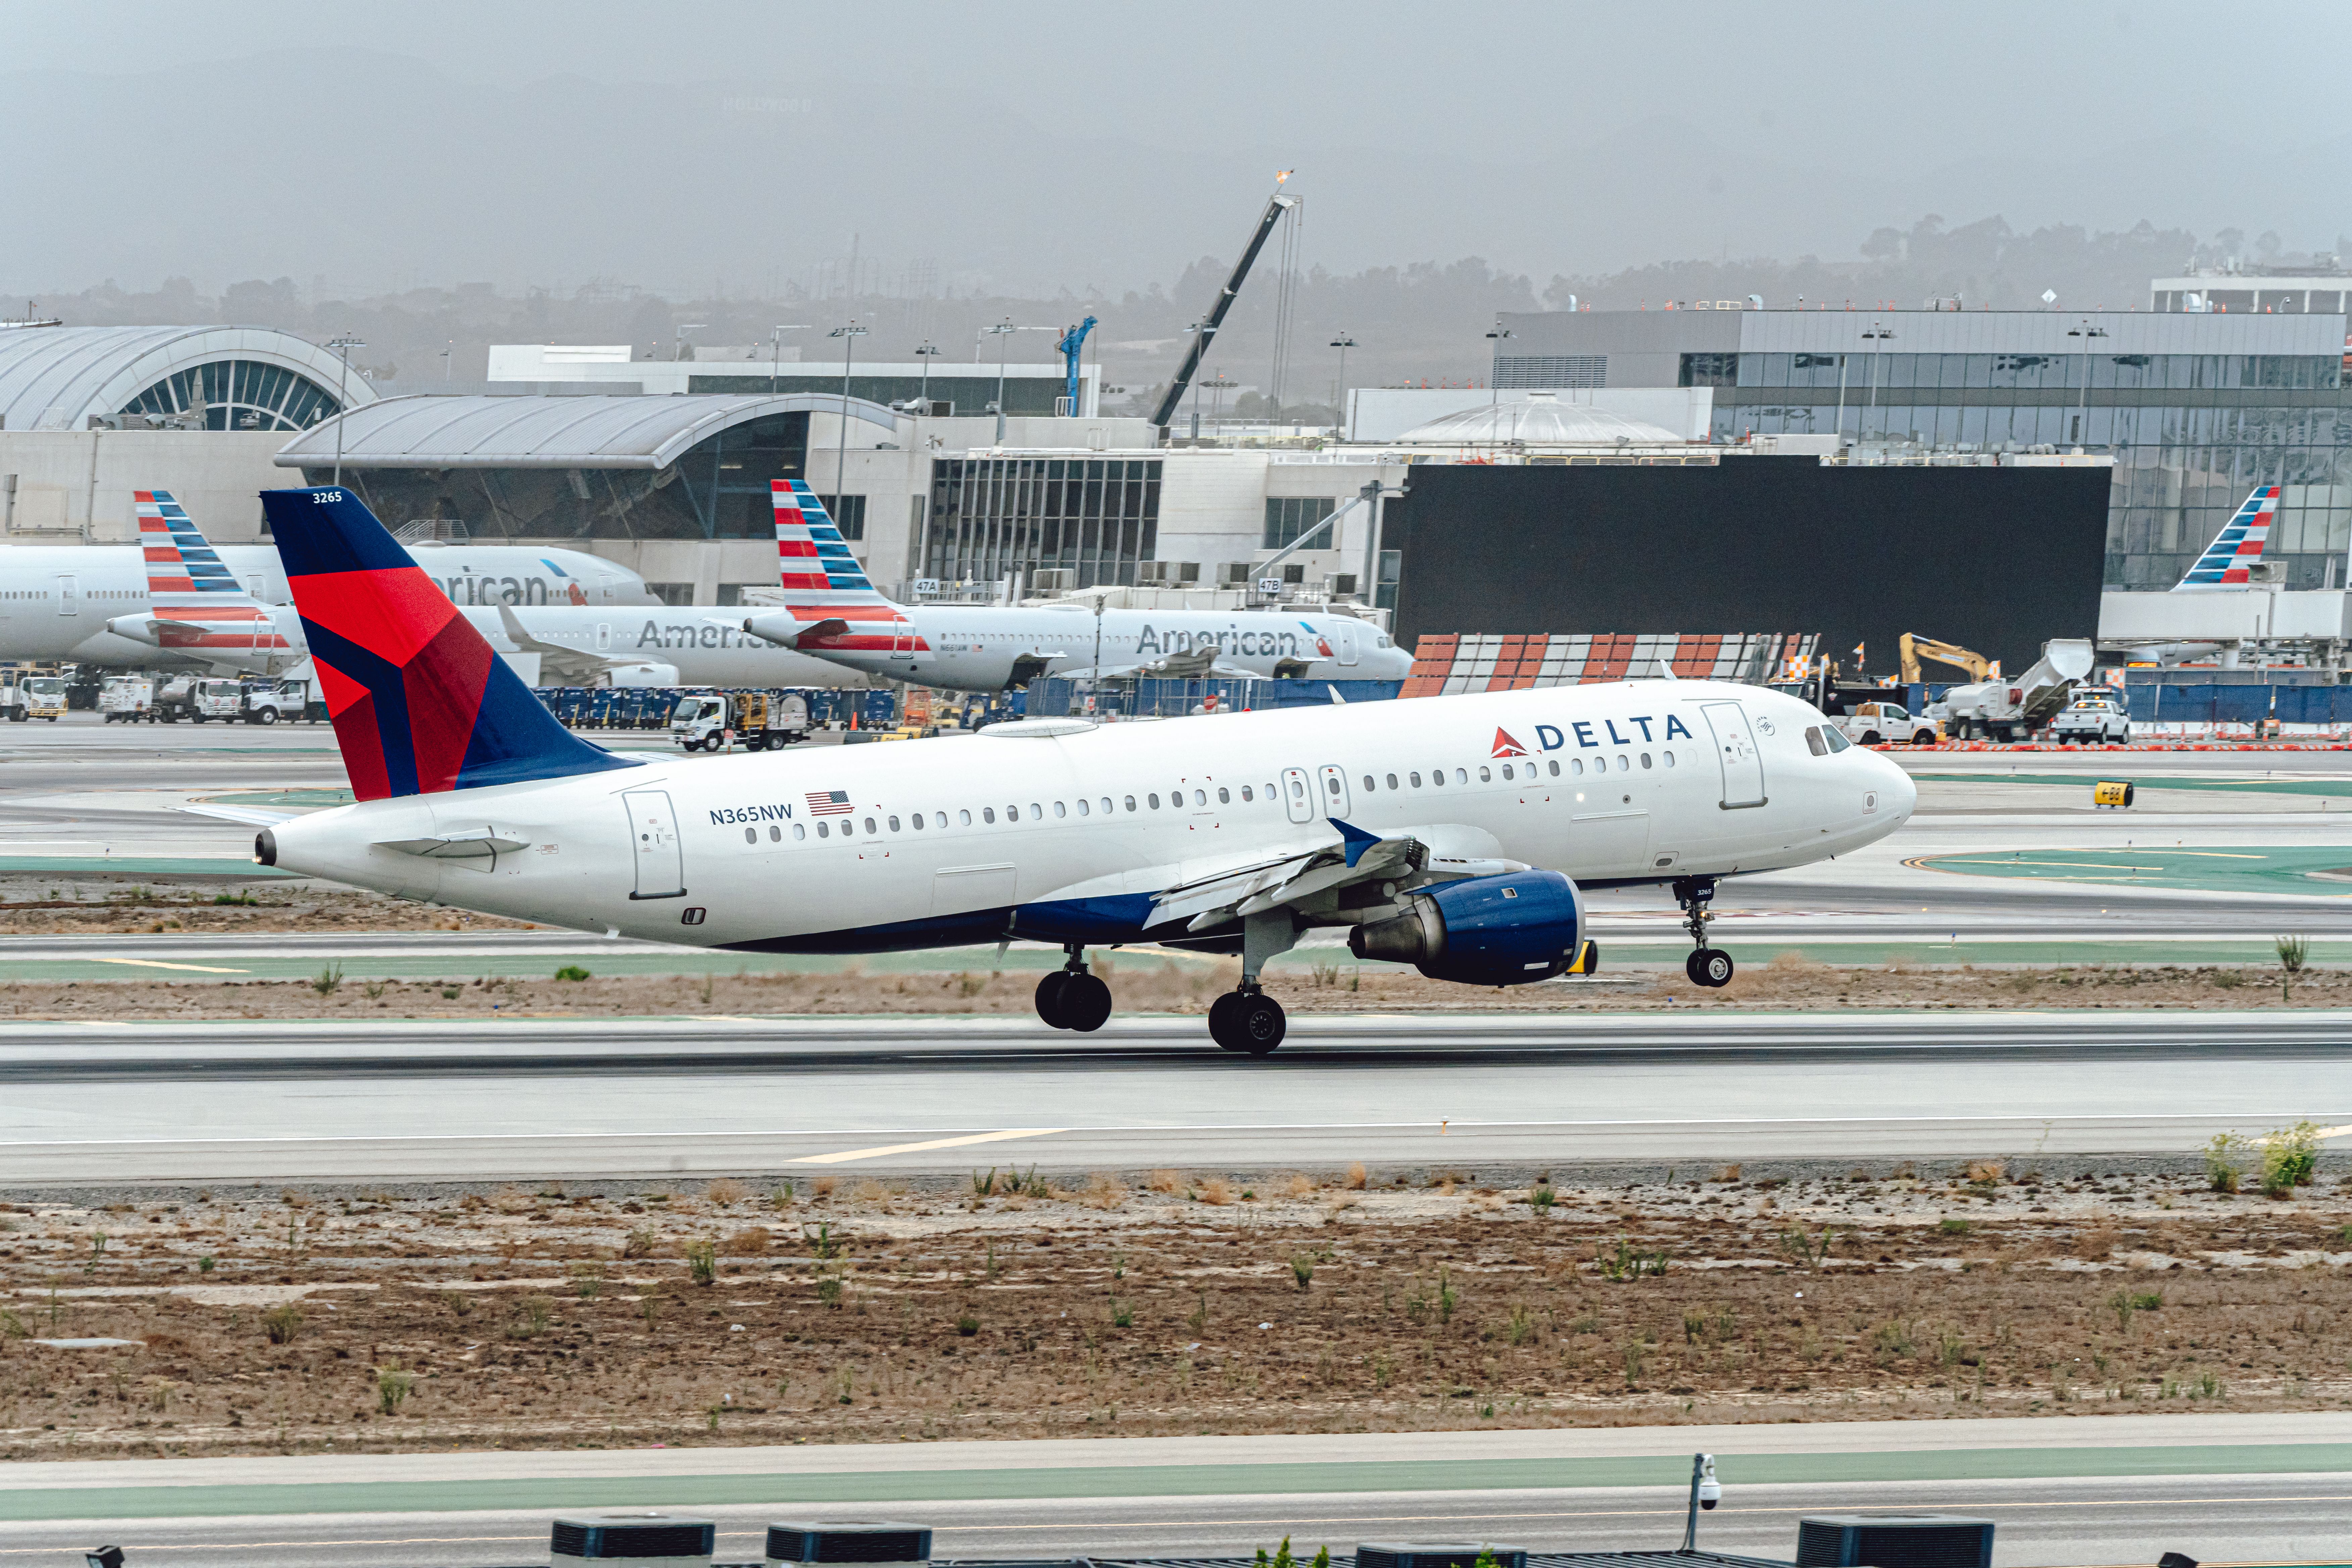 Delta Air Lines Airbus A320 landing at LAX